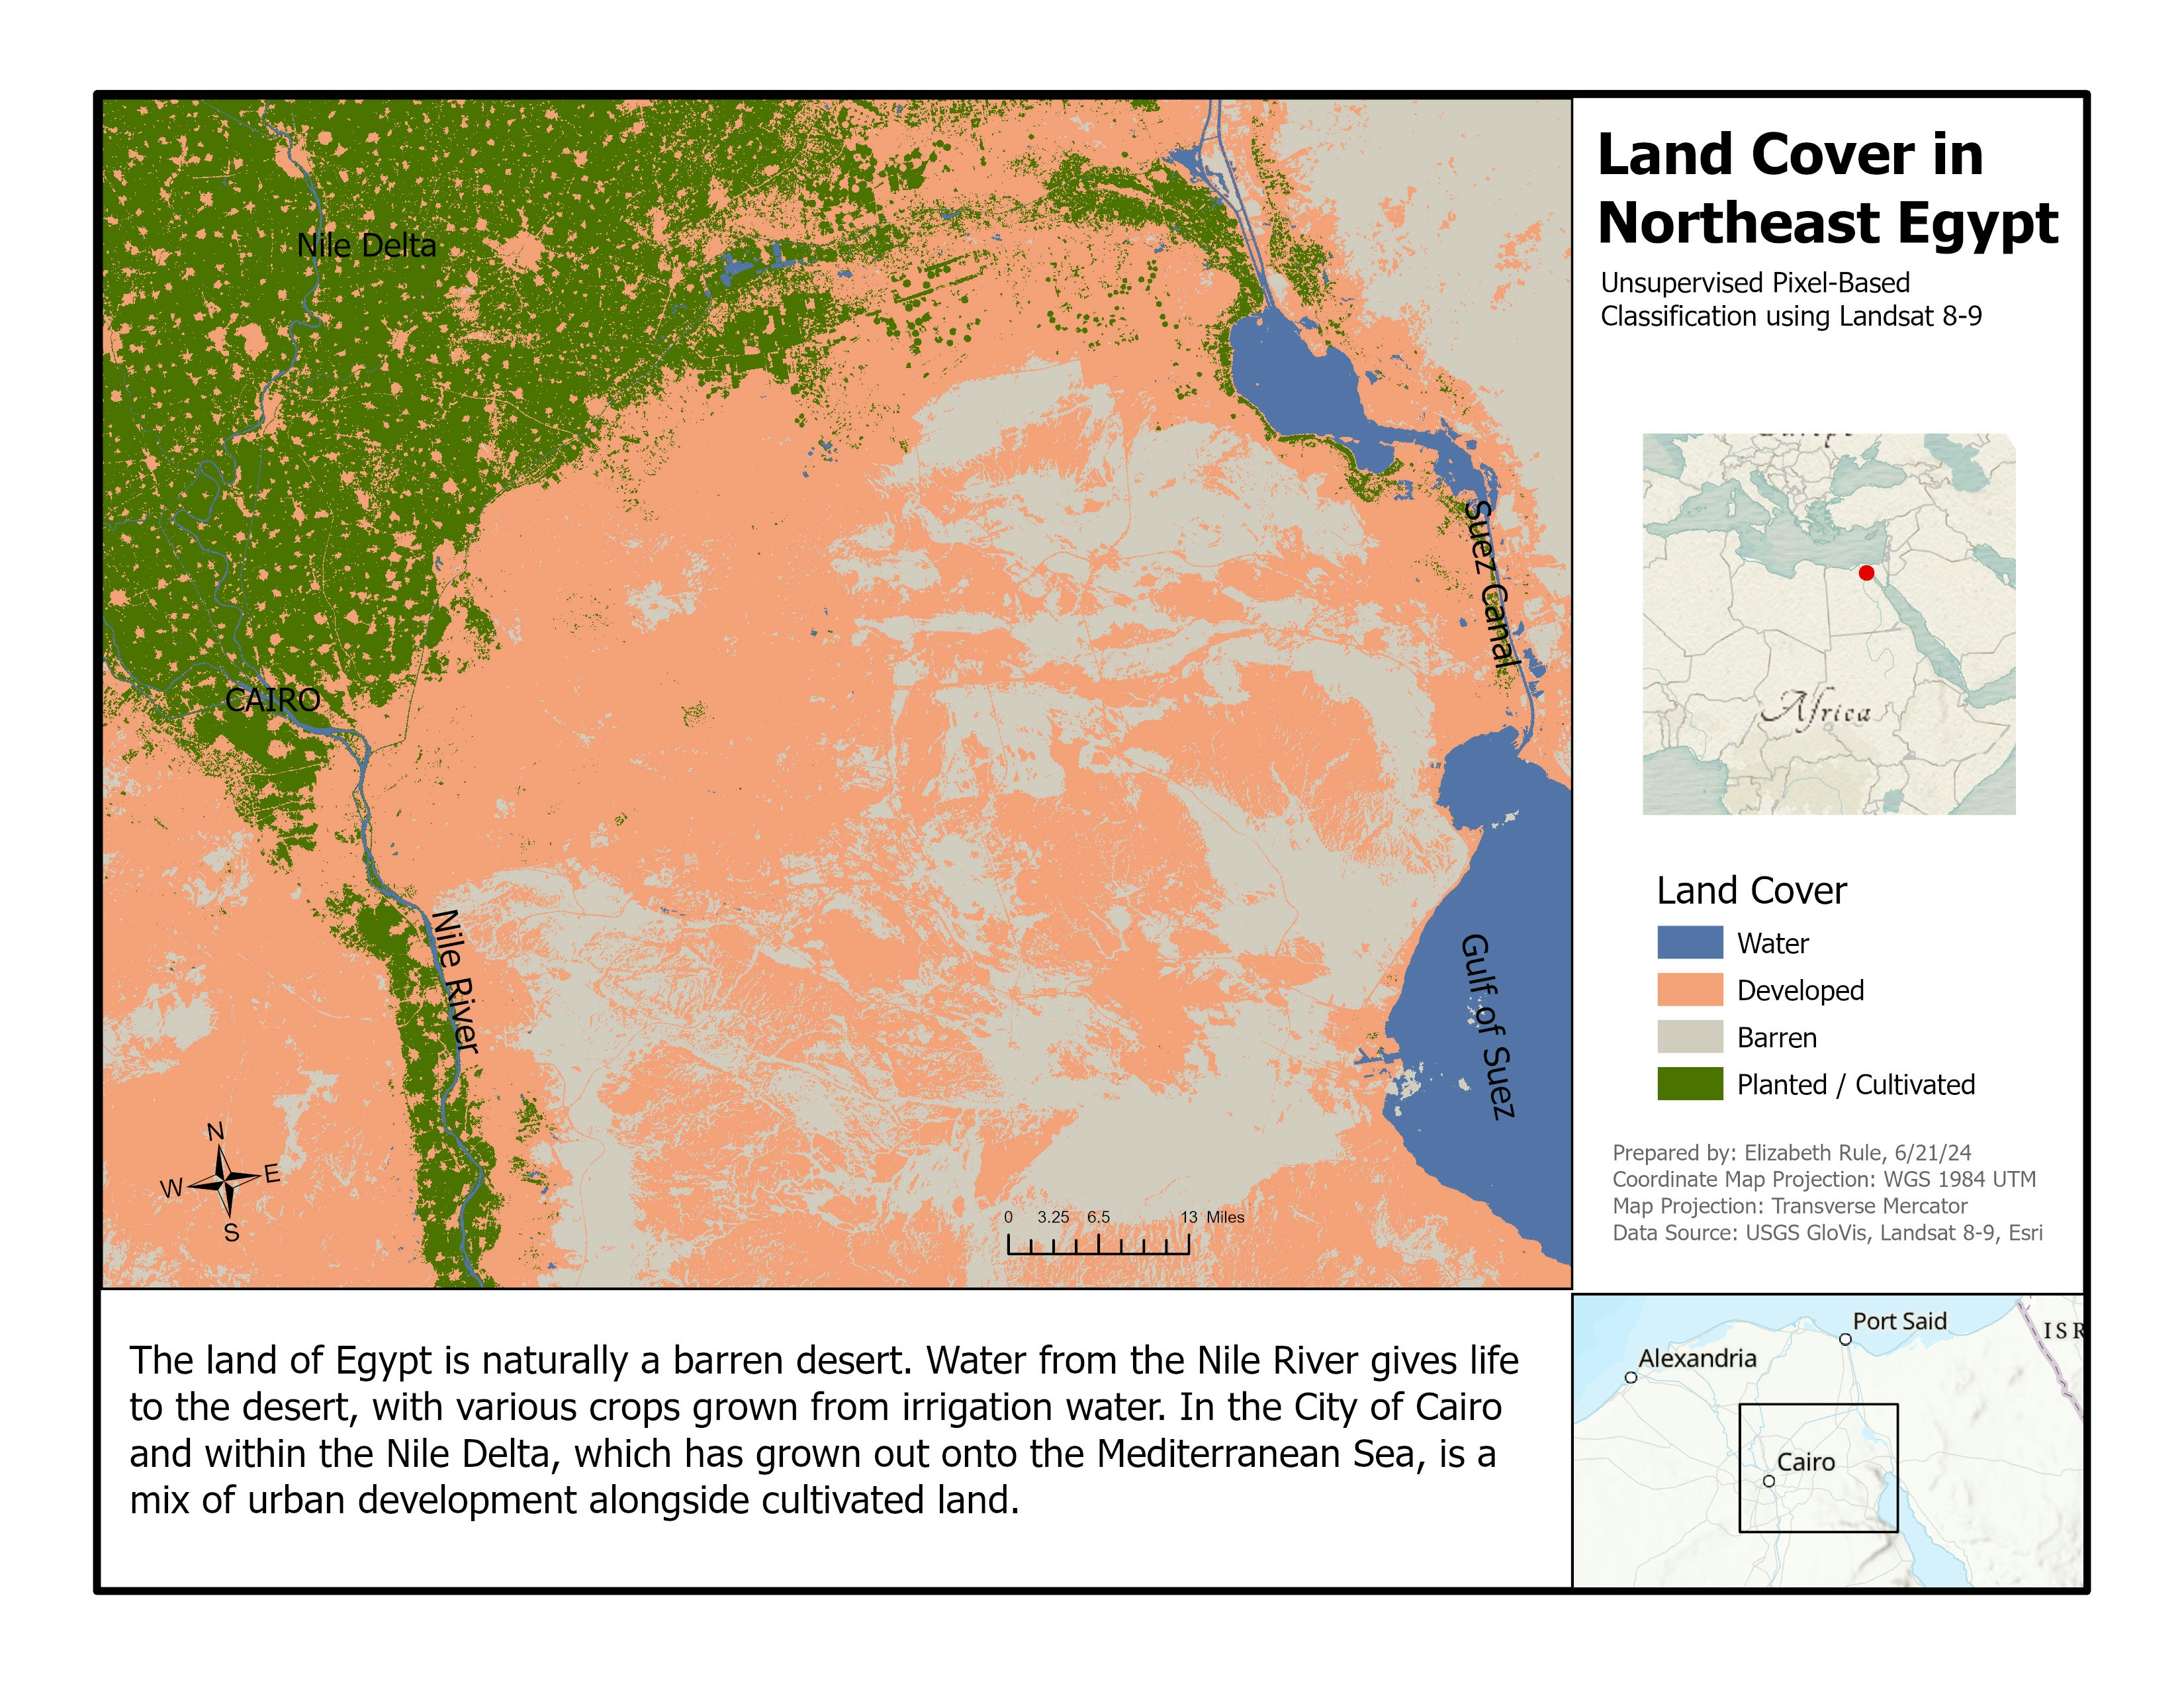 Unsupervised Land Classification